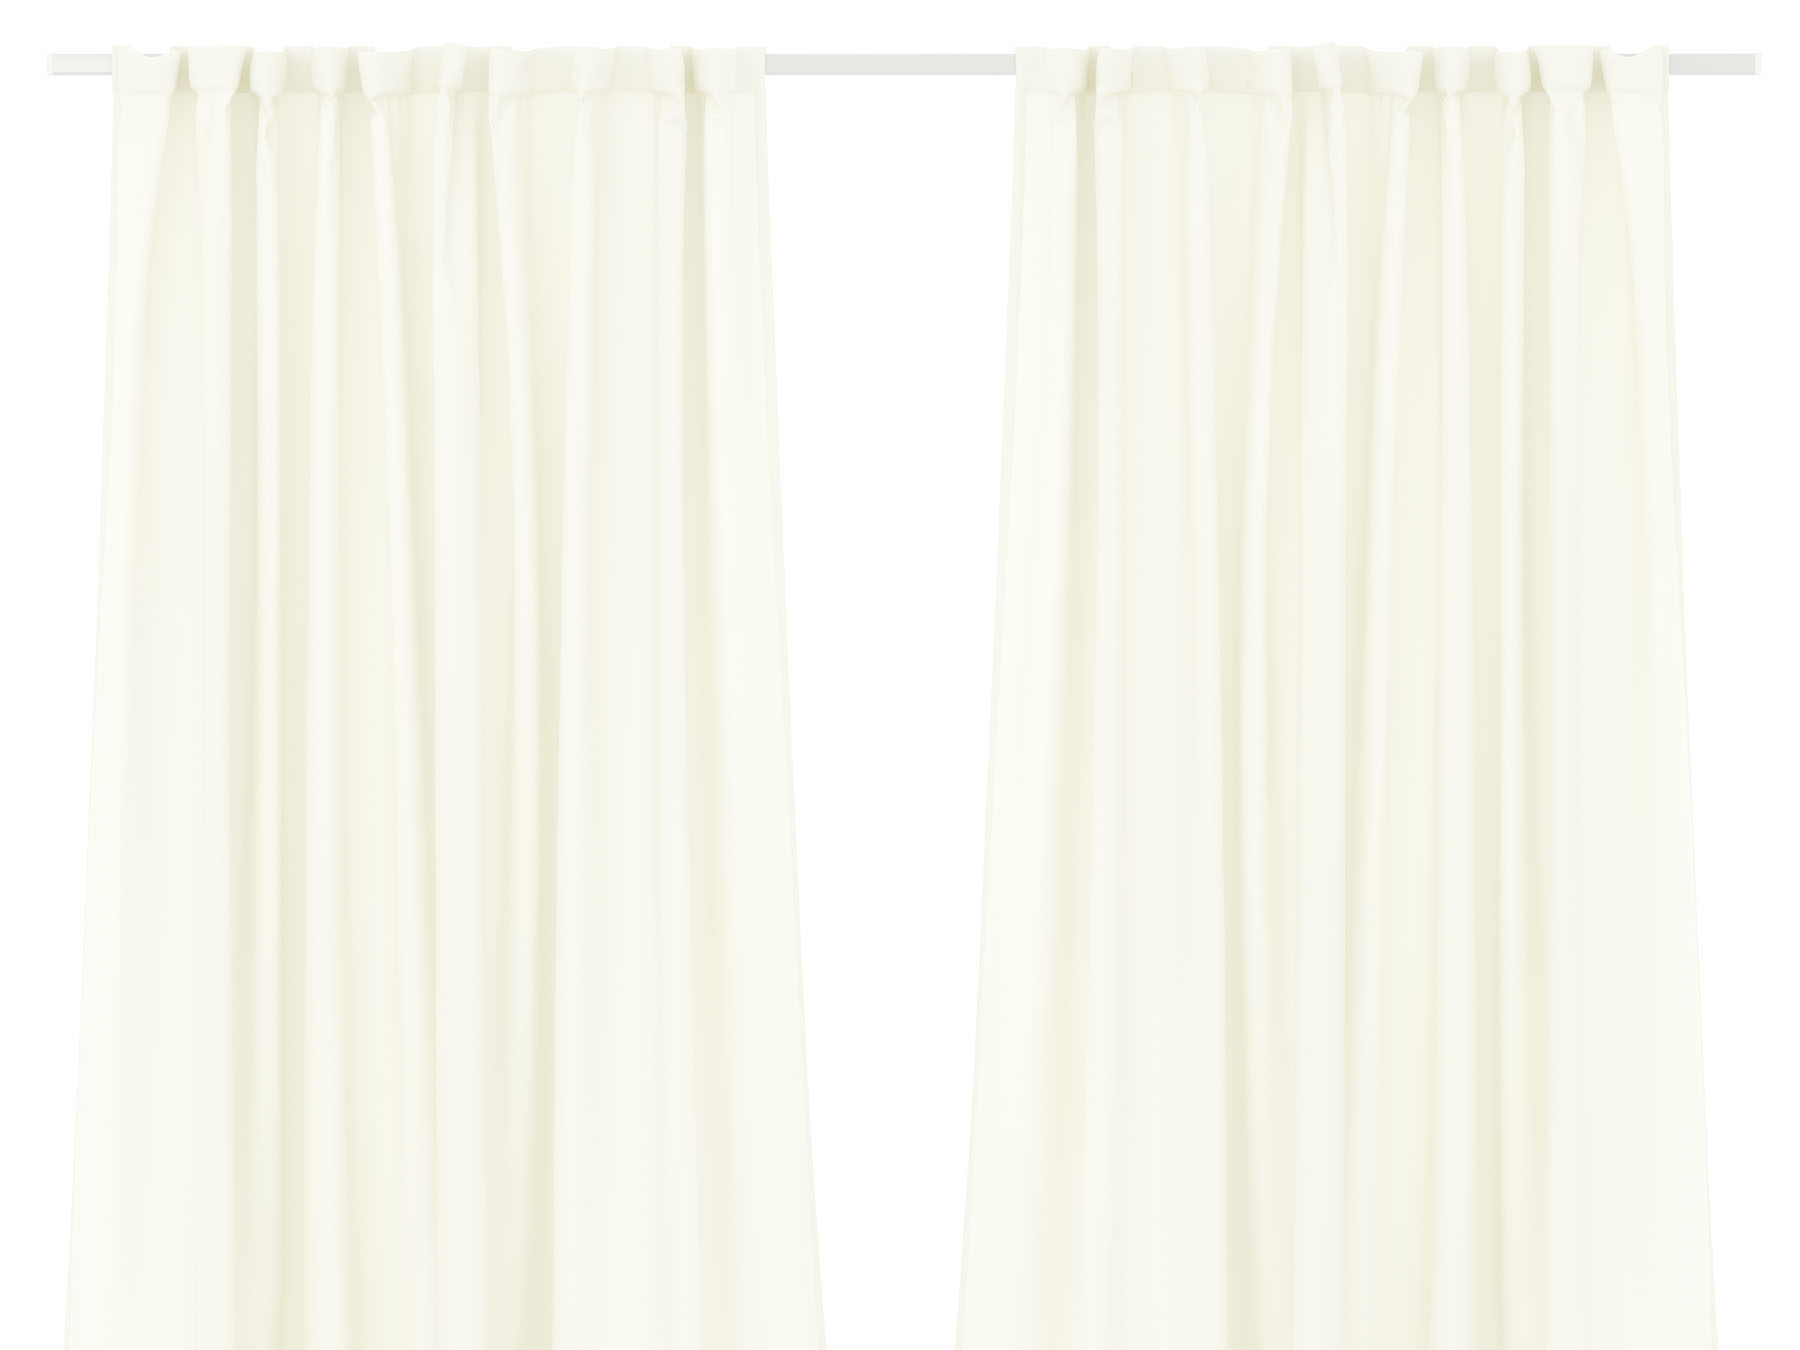 Sheer Curtain Taped Creamy White - 265 x 218cm